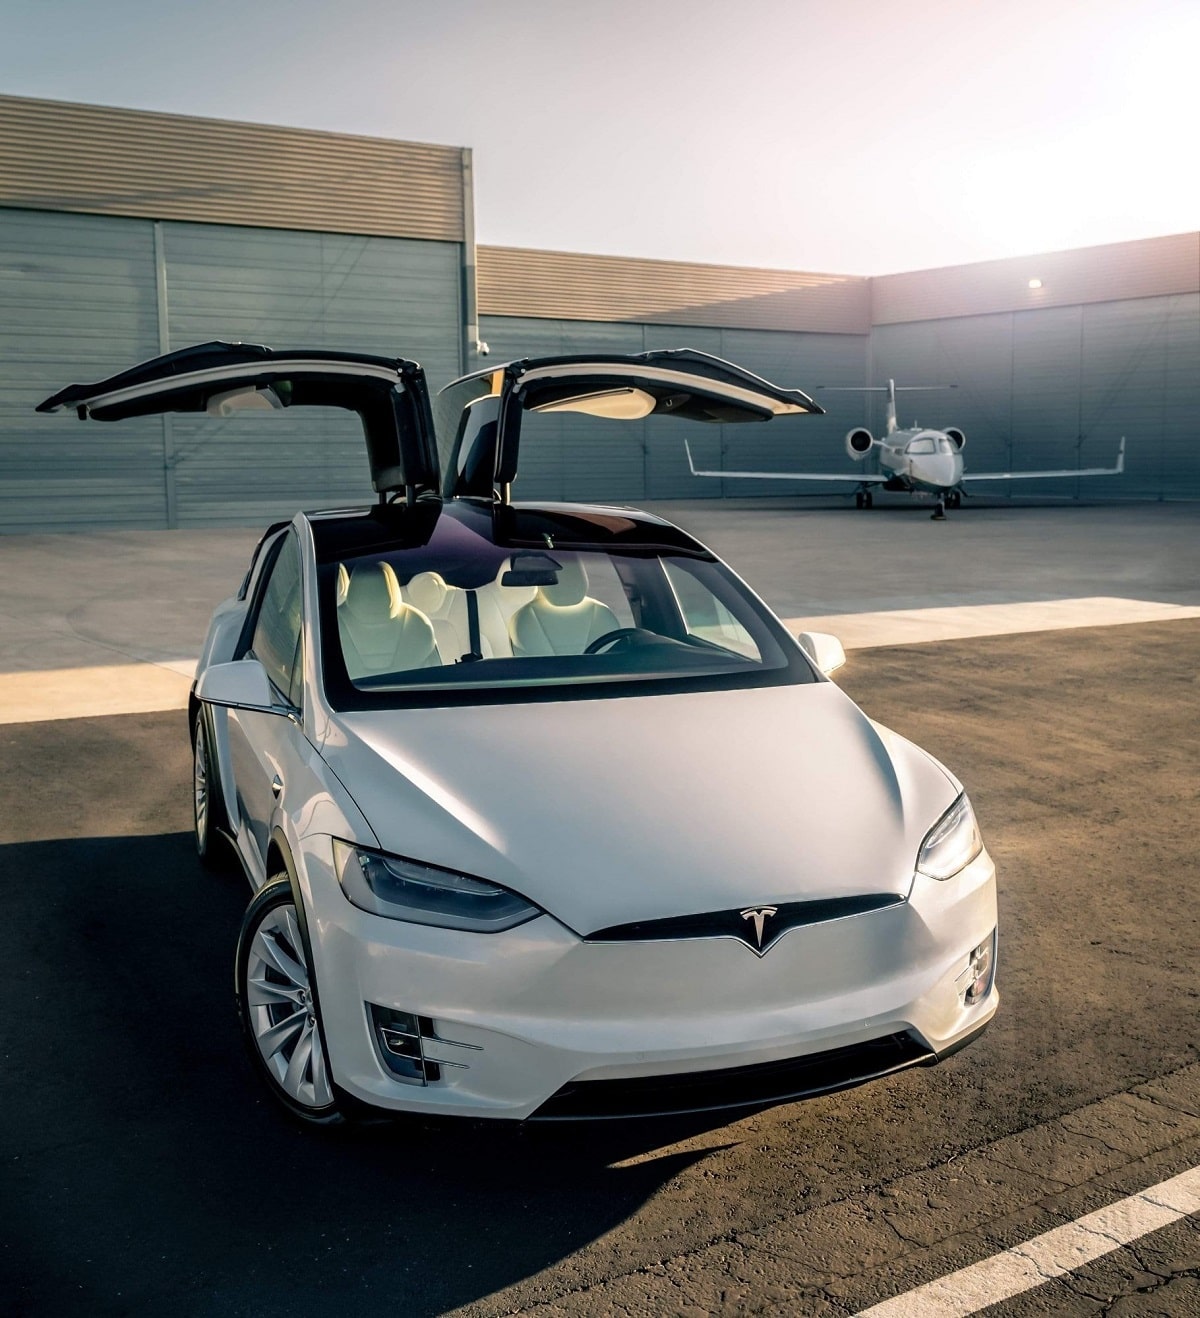 Tesla's Profit Predictions in Question